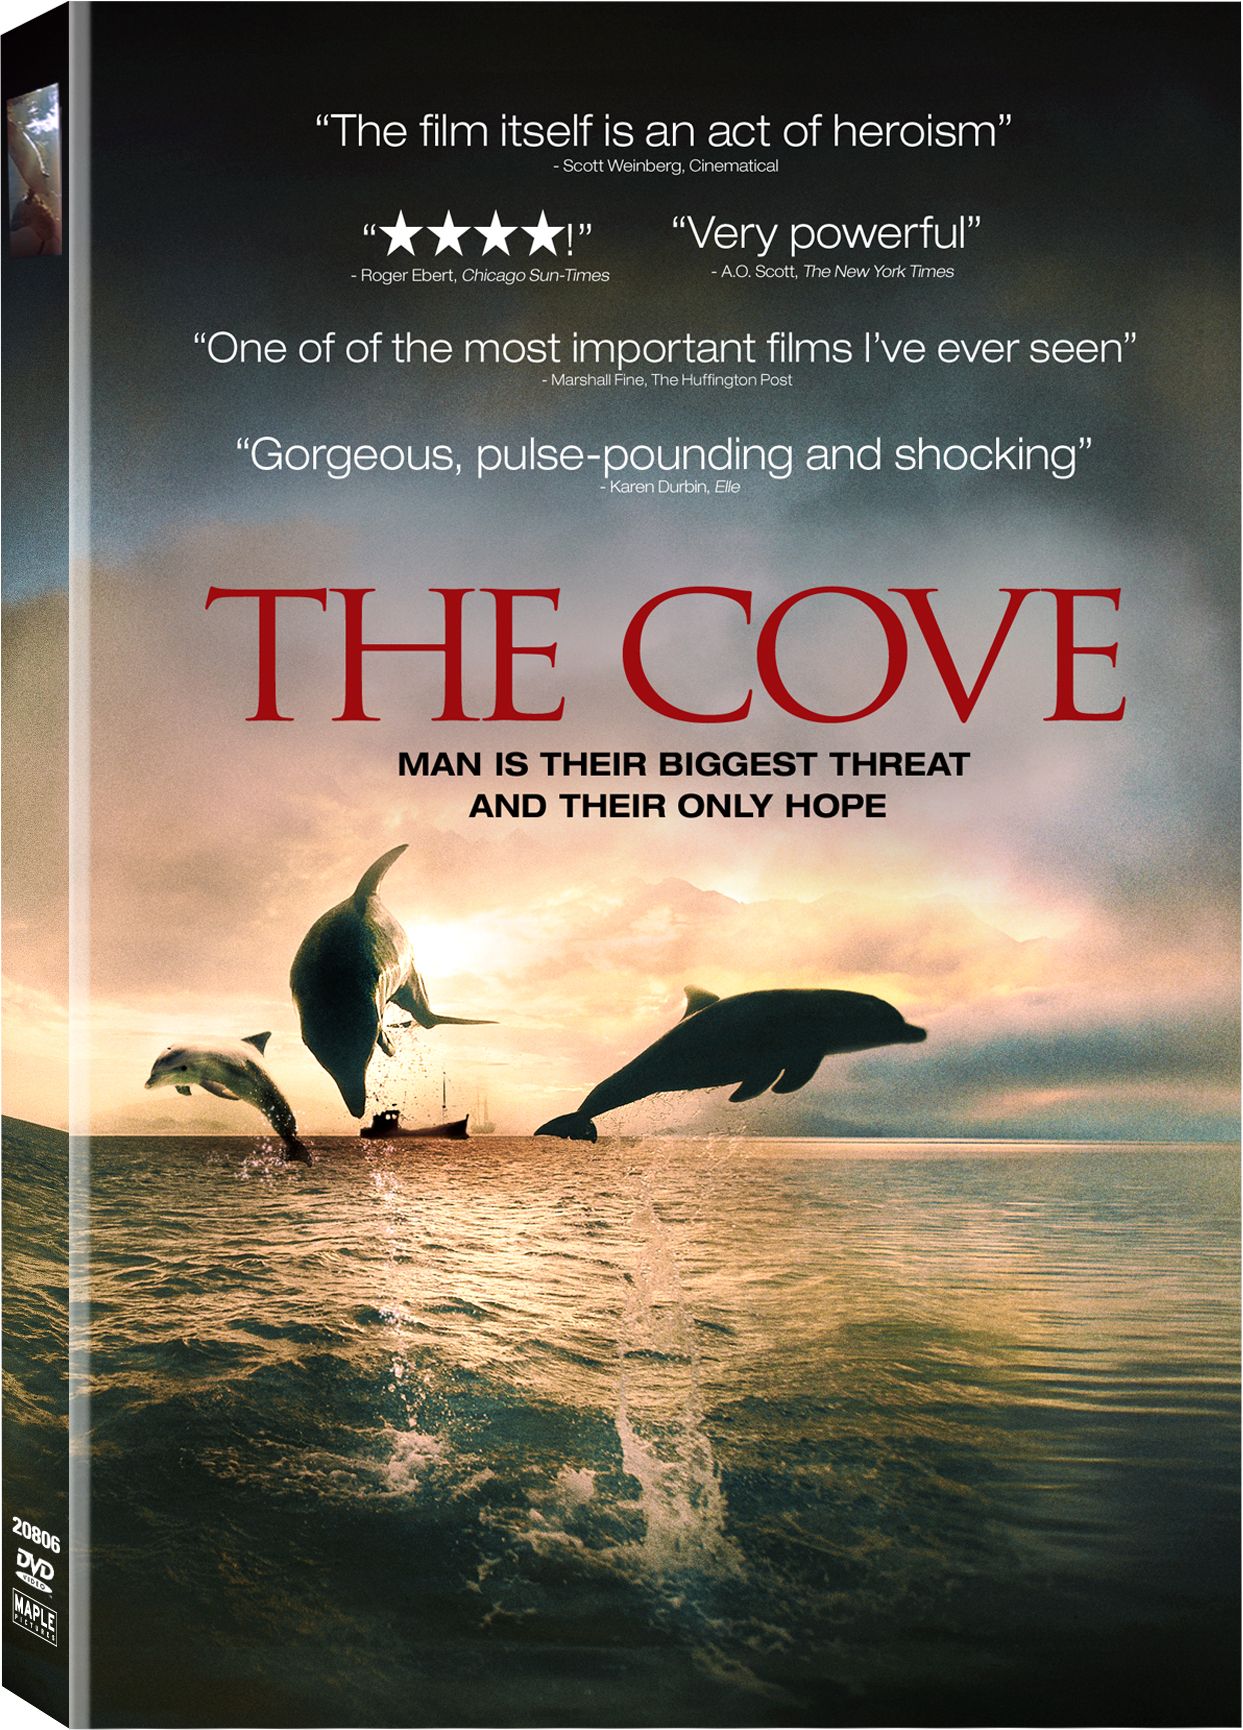 The Cove DVD.jpg